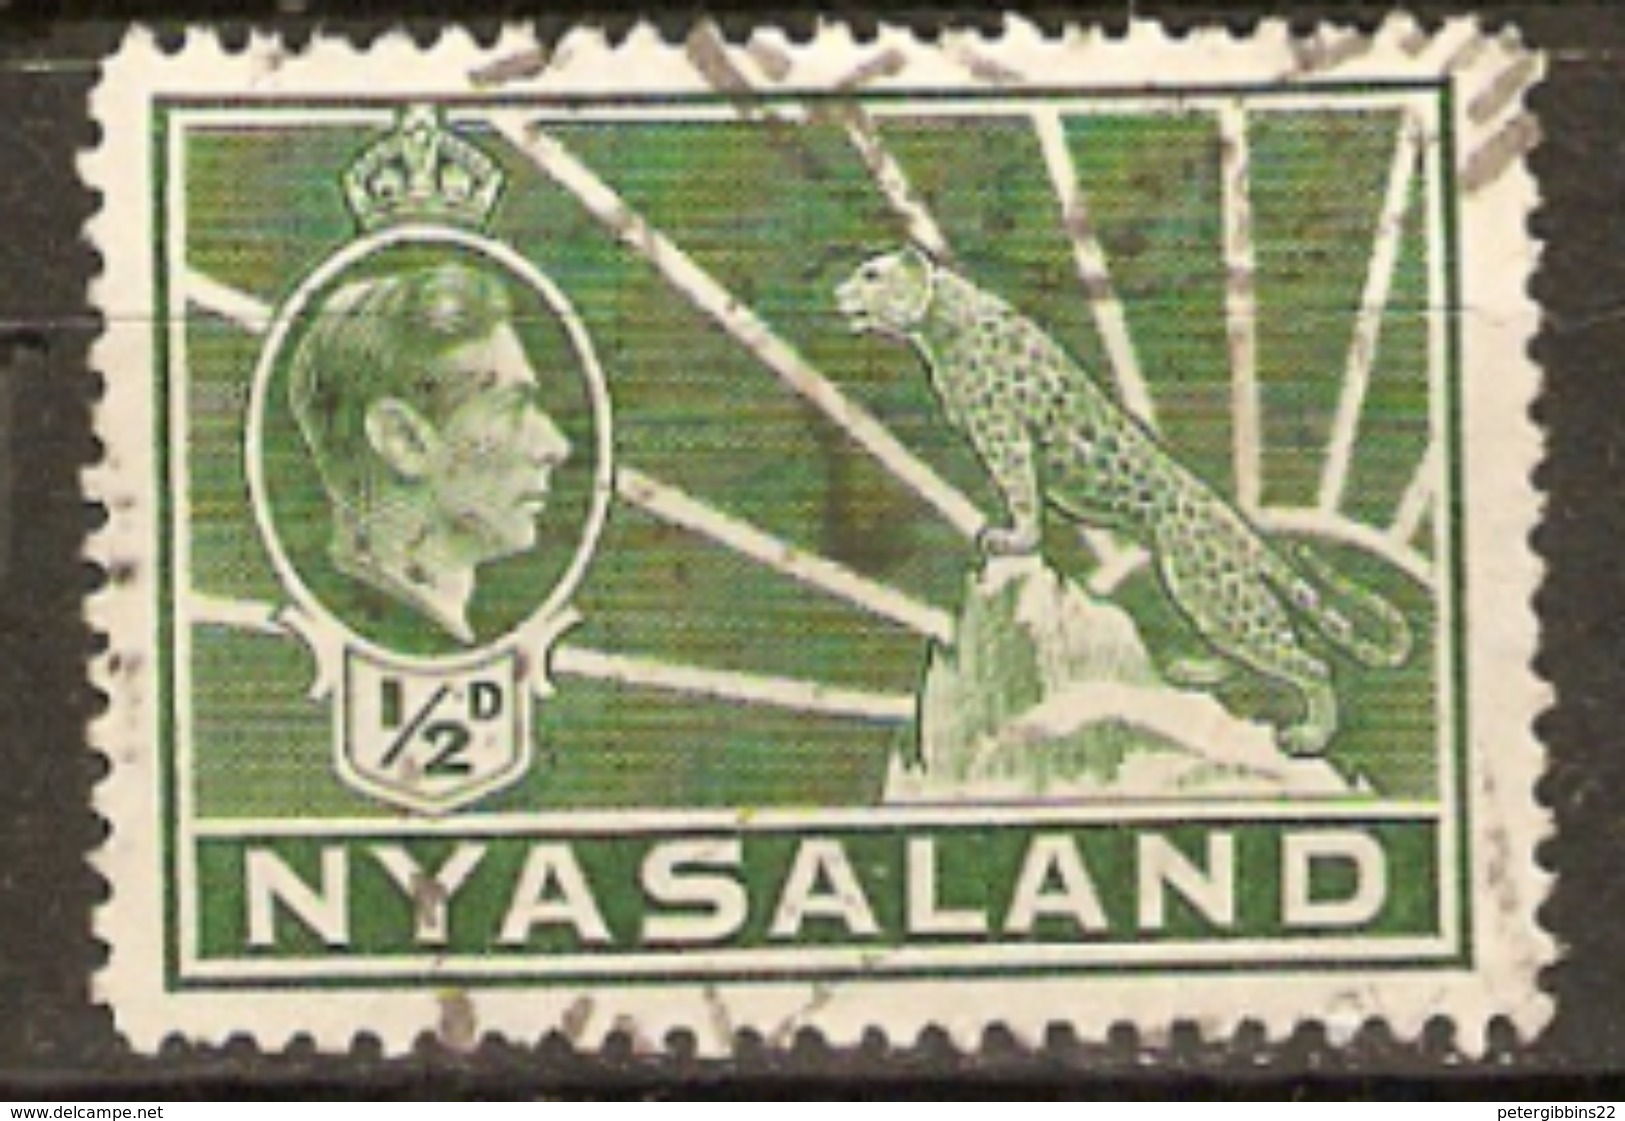 Nyasaland 1938 SG 130 1/2d Green Fine Used - Nyassaland (1907-1953)